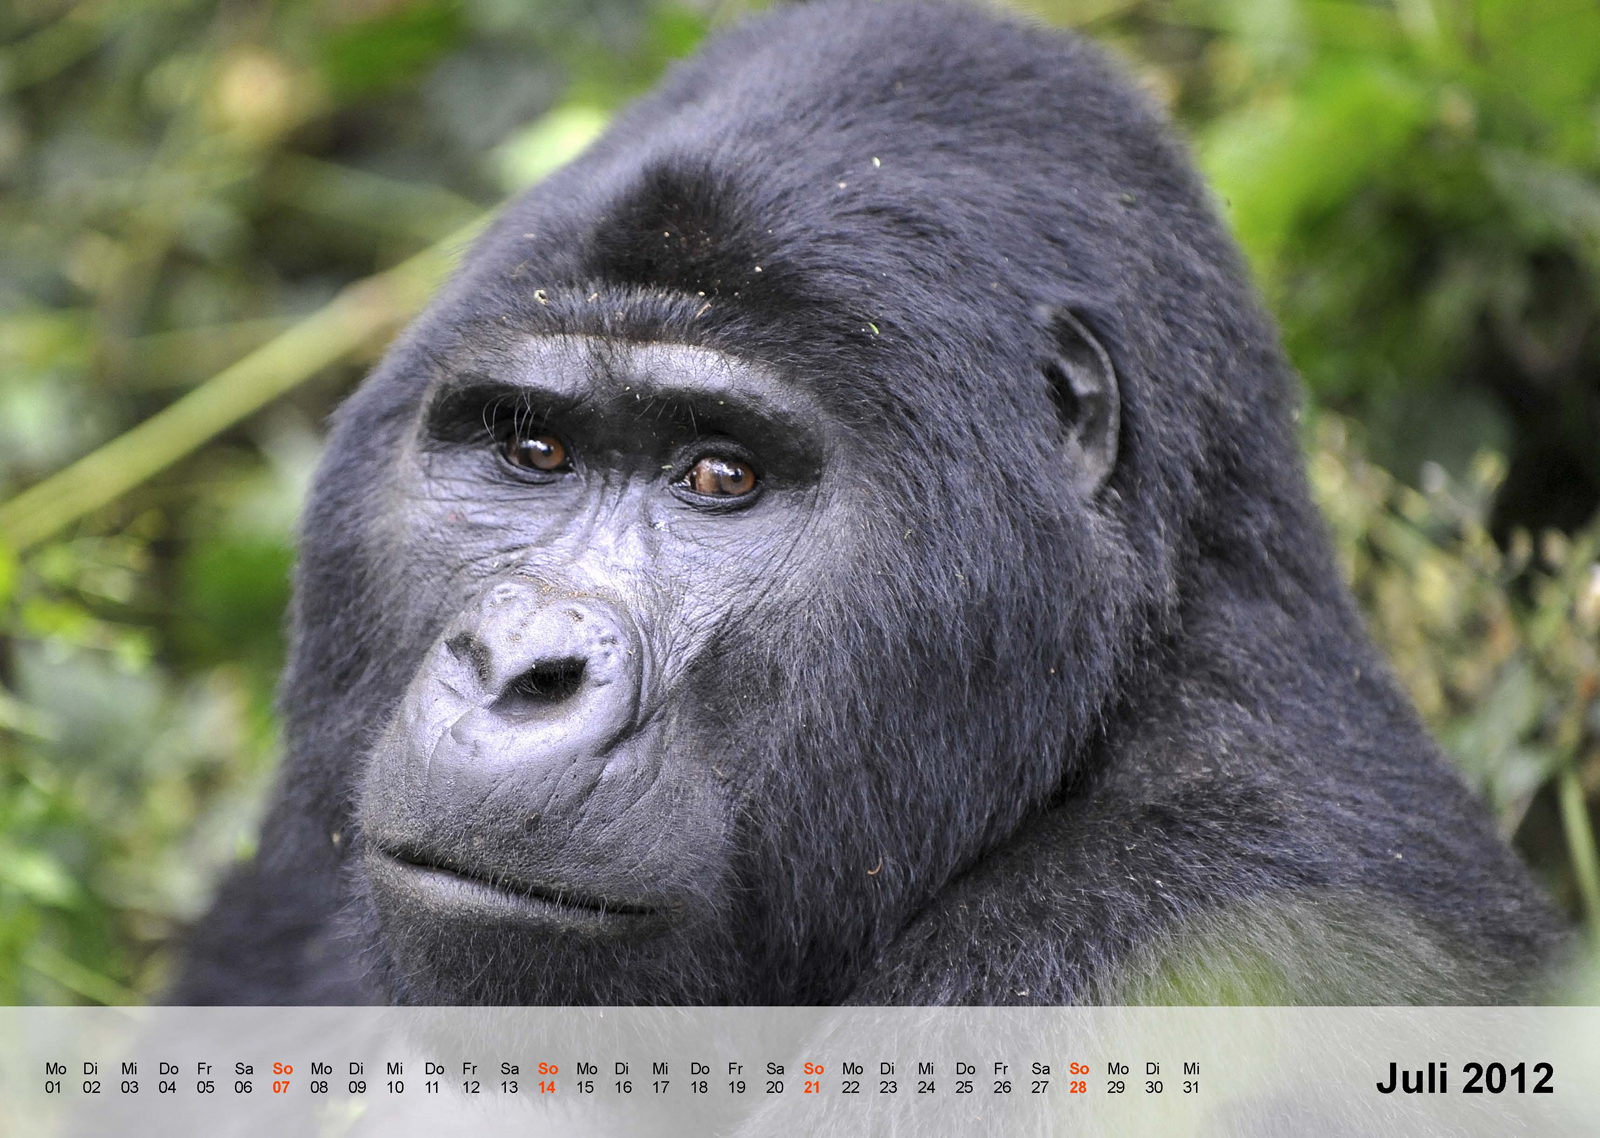 Berggorilla | Mountain gorilla | Bwindi Impenetrable National Park | Uganda - Kalender 2012 - Juli